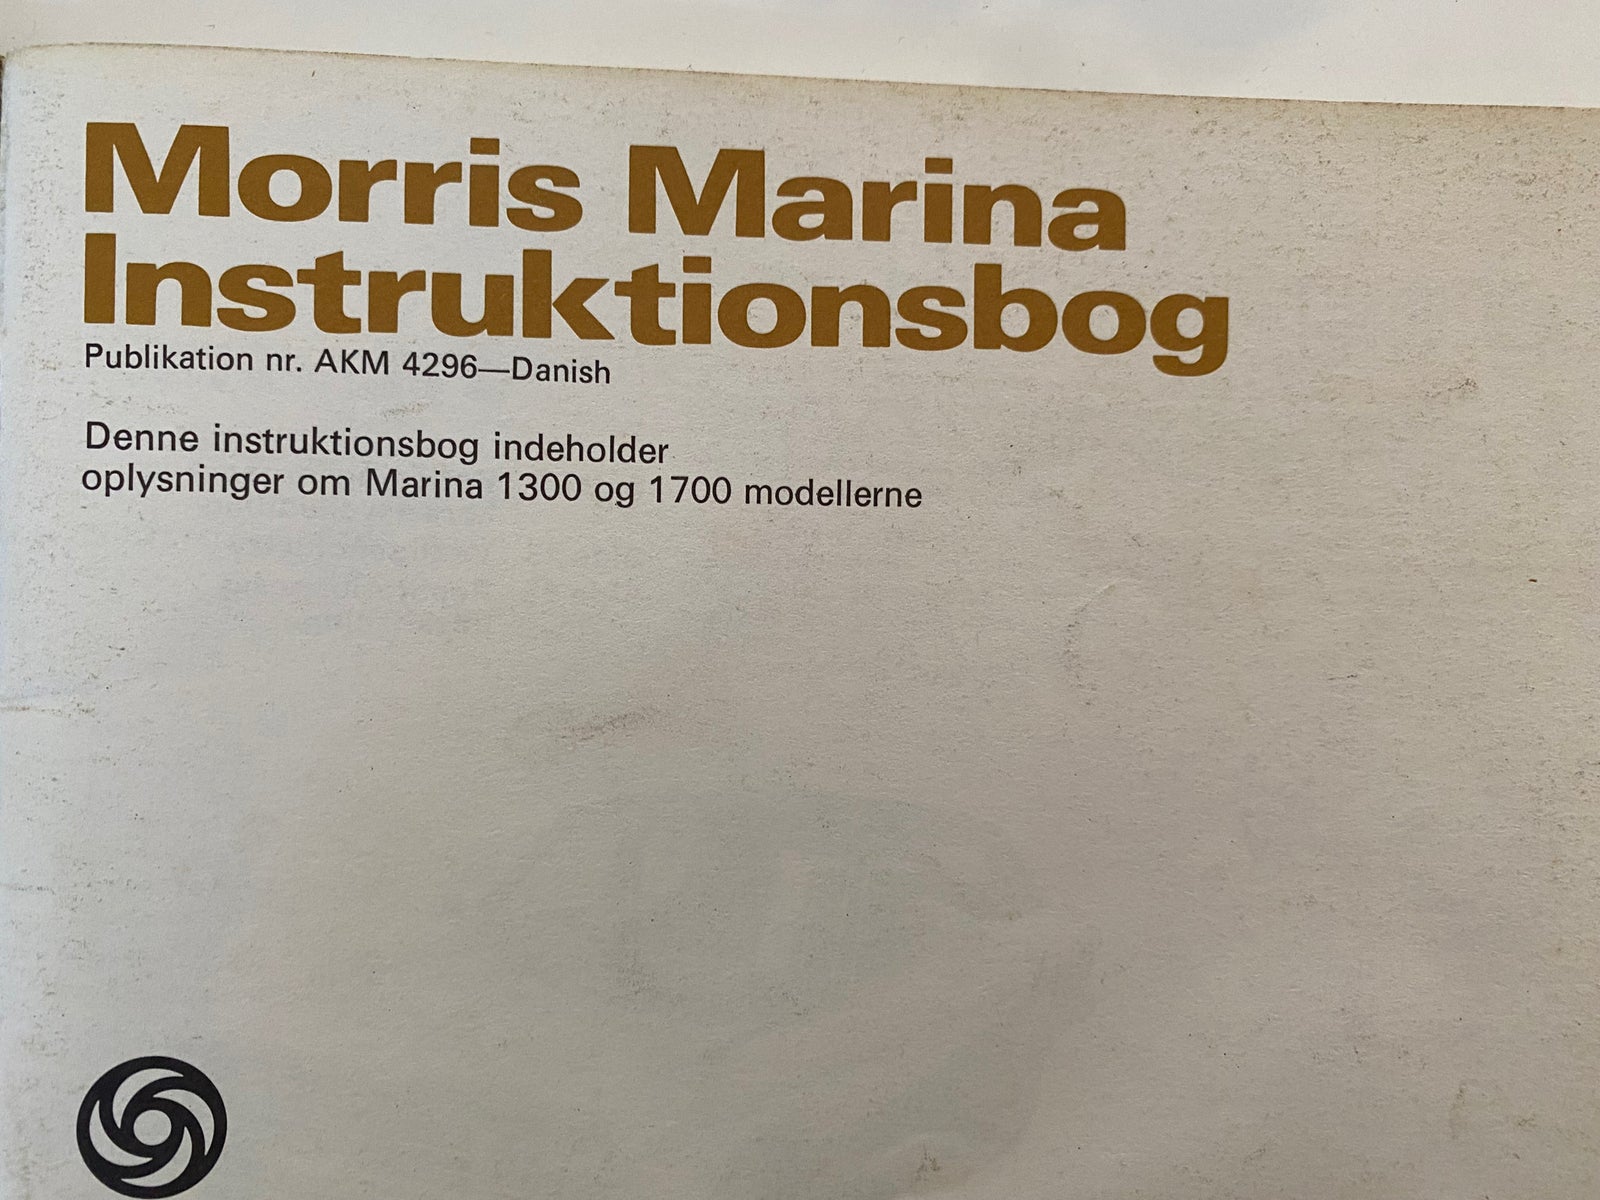 Andet biltilbehør, Morris Marina